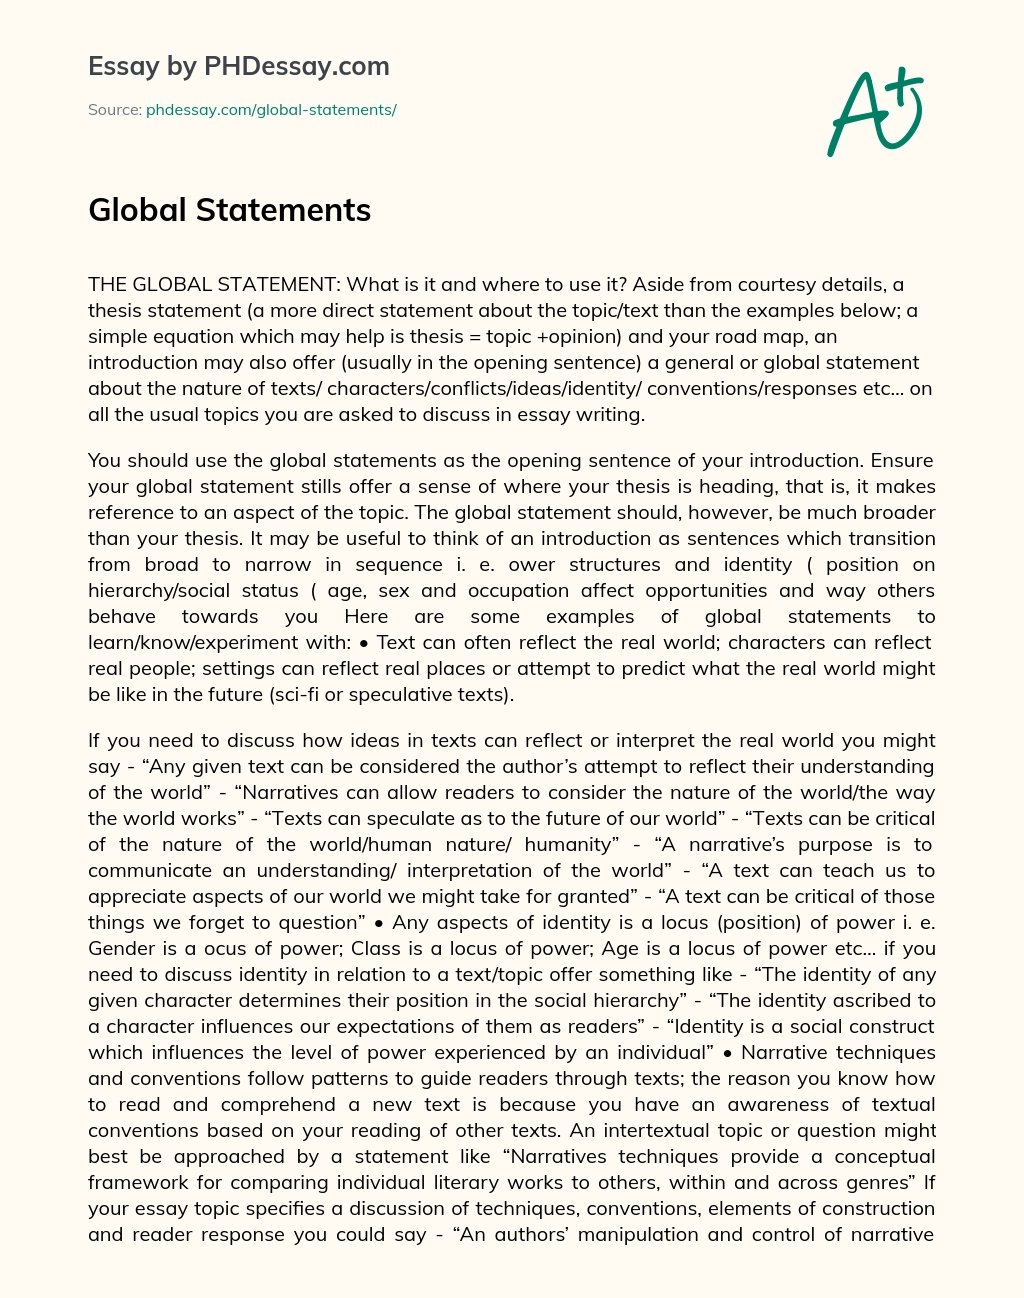 Global Statements essay